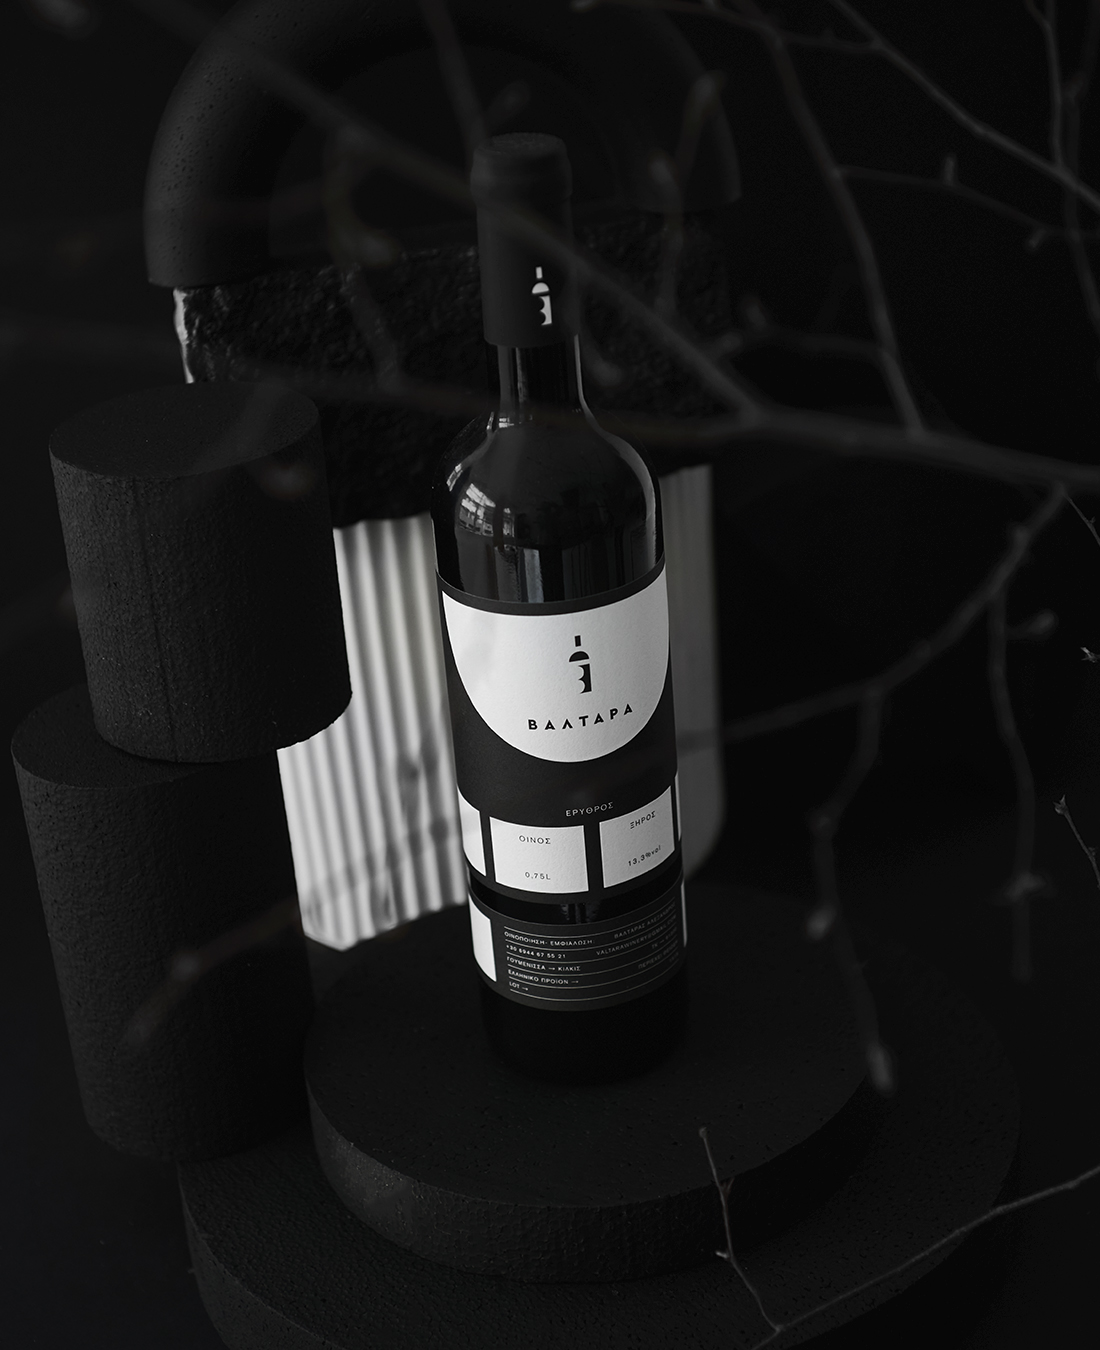 Crom Studio Designs New Wine Labels for Valtara Winery